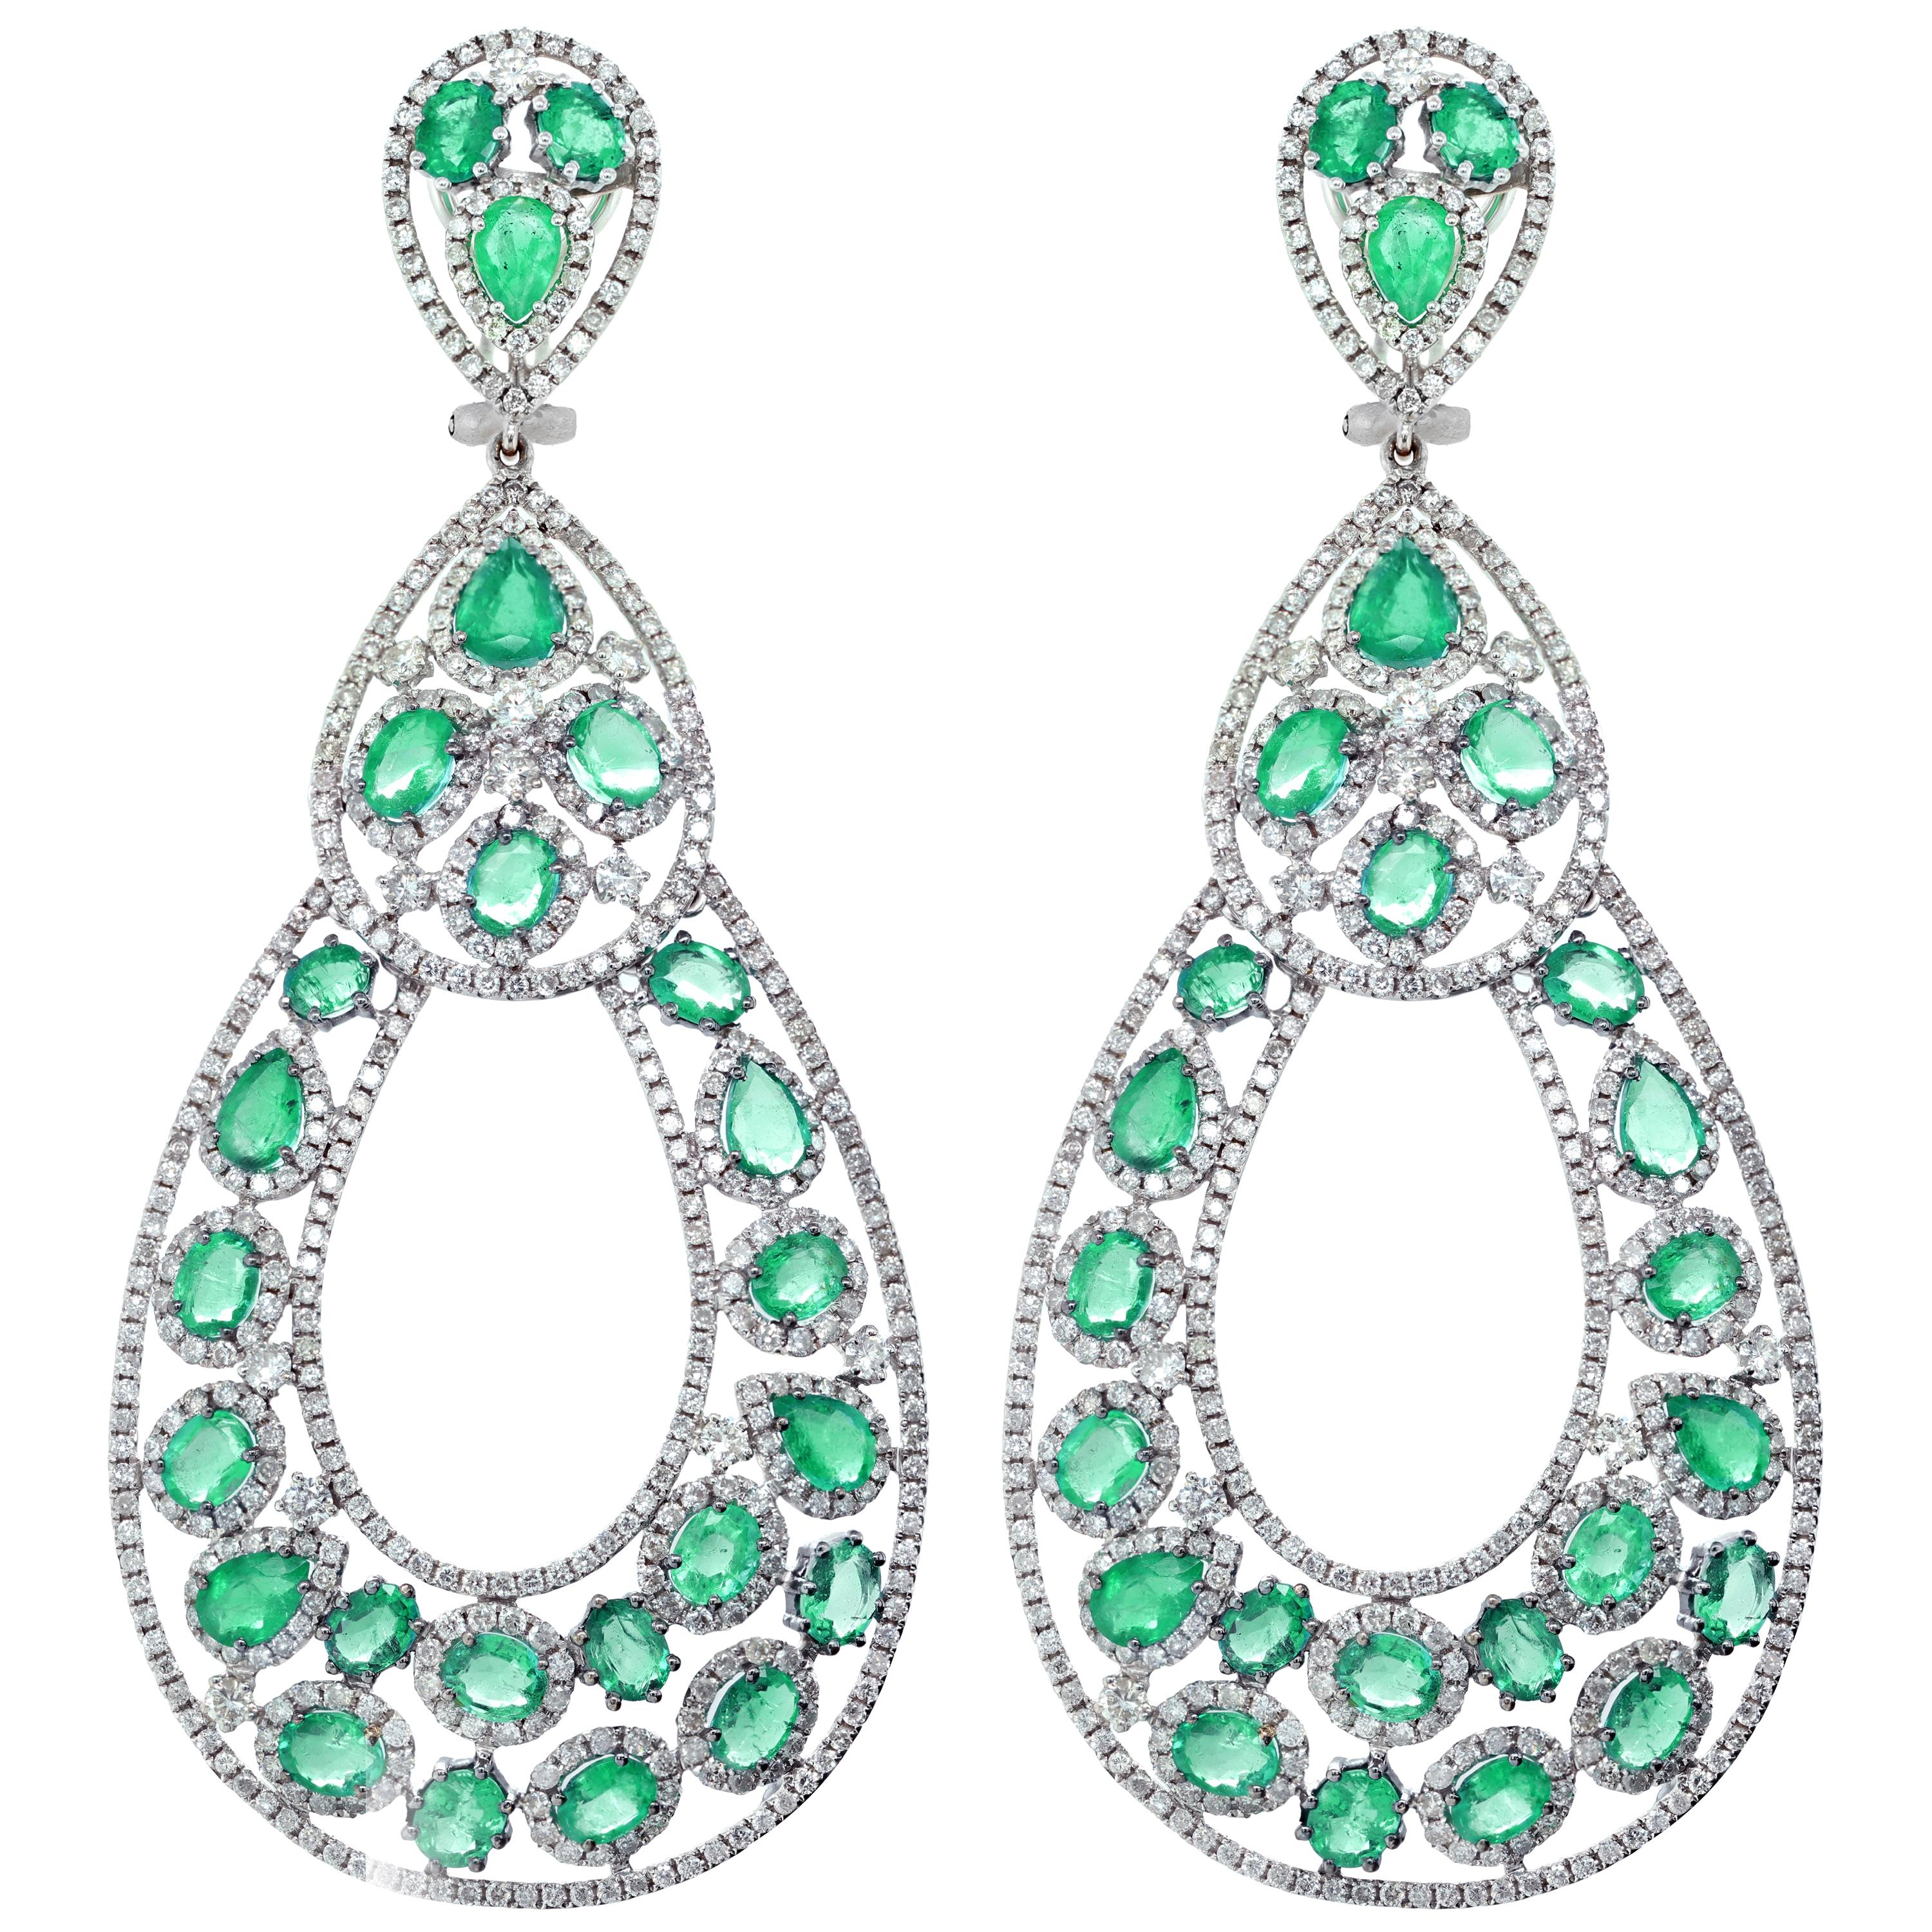 Diana M. Atemberaubende Smaragd- und Diamant-Ohrringe von Diana M.